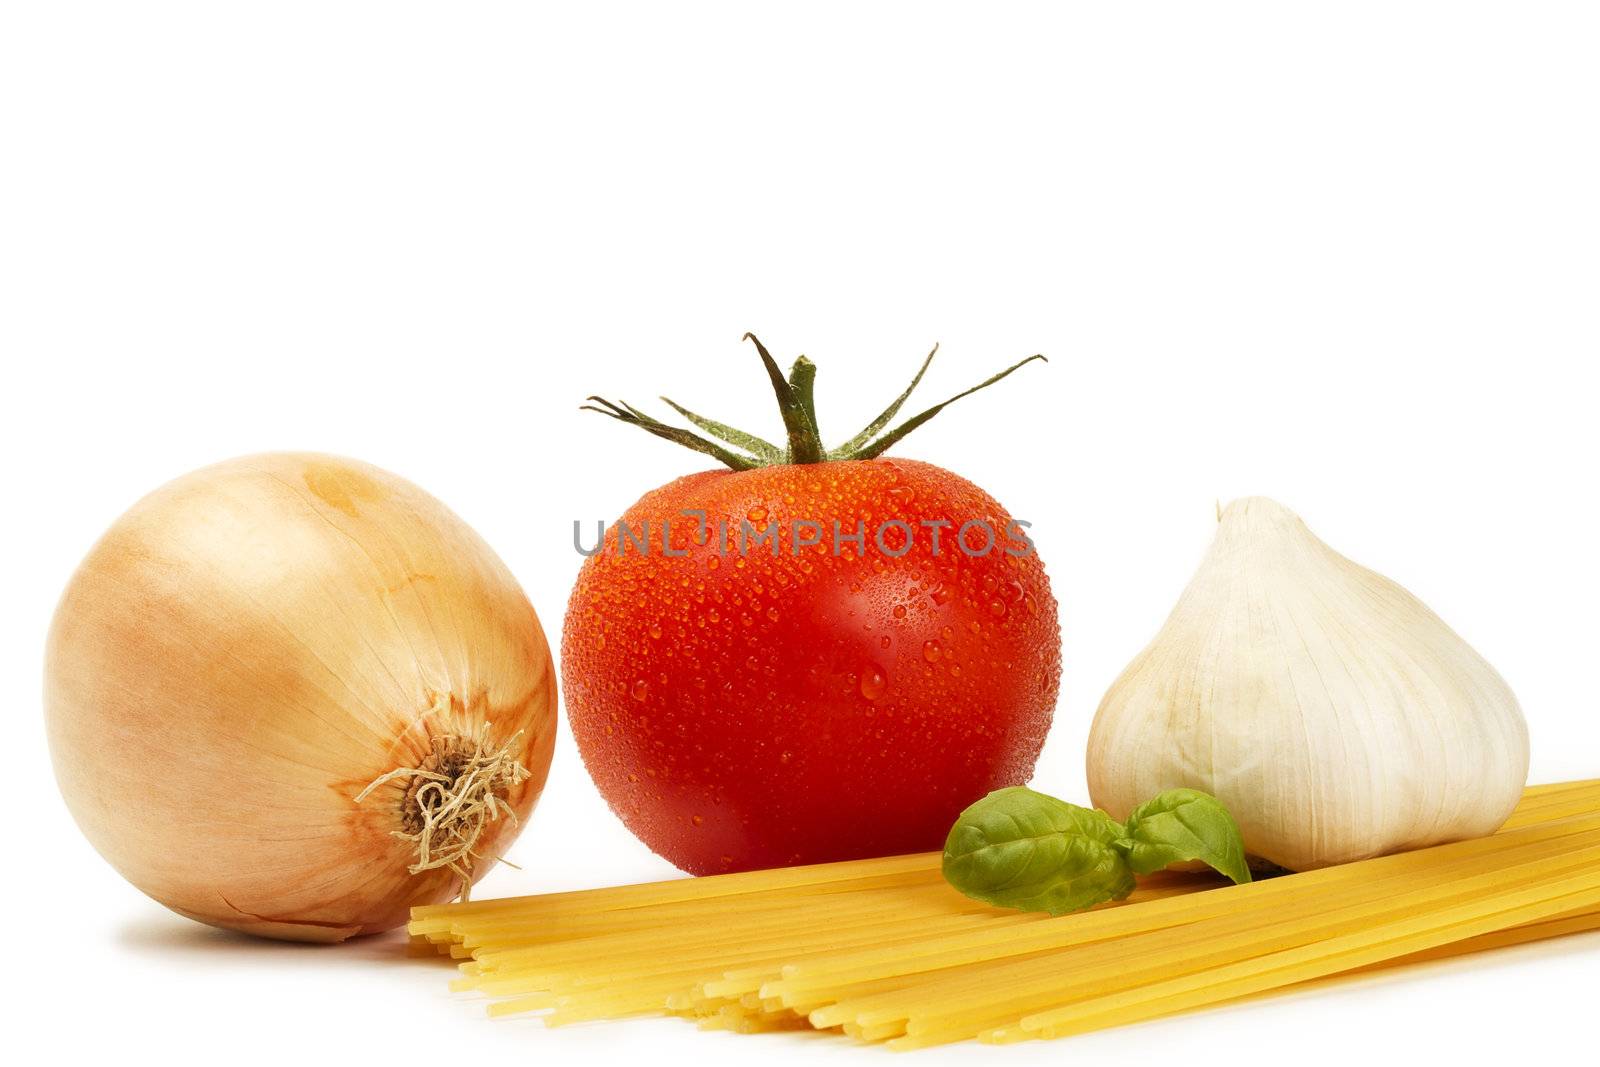 raw spaghetti with tomato, basil, garlic and onion on white background